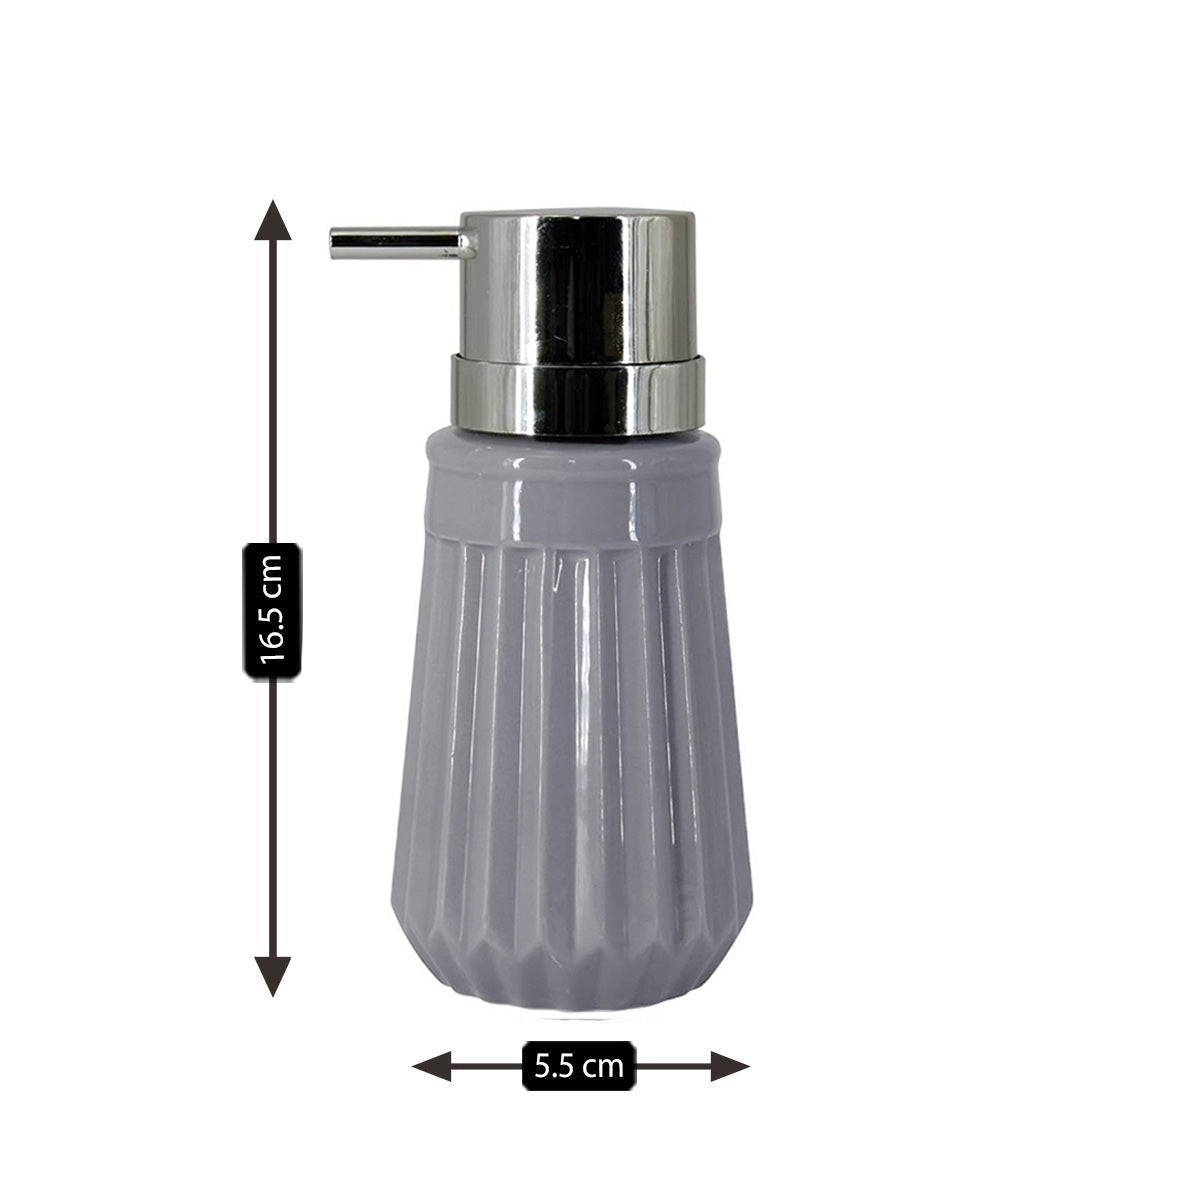 Ceramic Soap Dispenser Pump for Bathroom for Bath Gel, Lotion, Shampoo (6034)